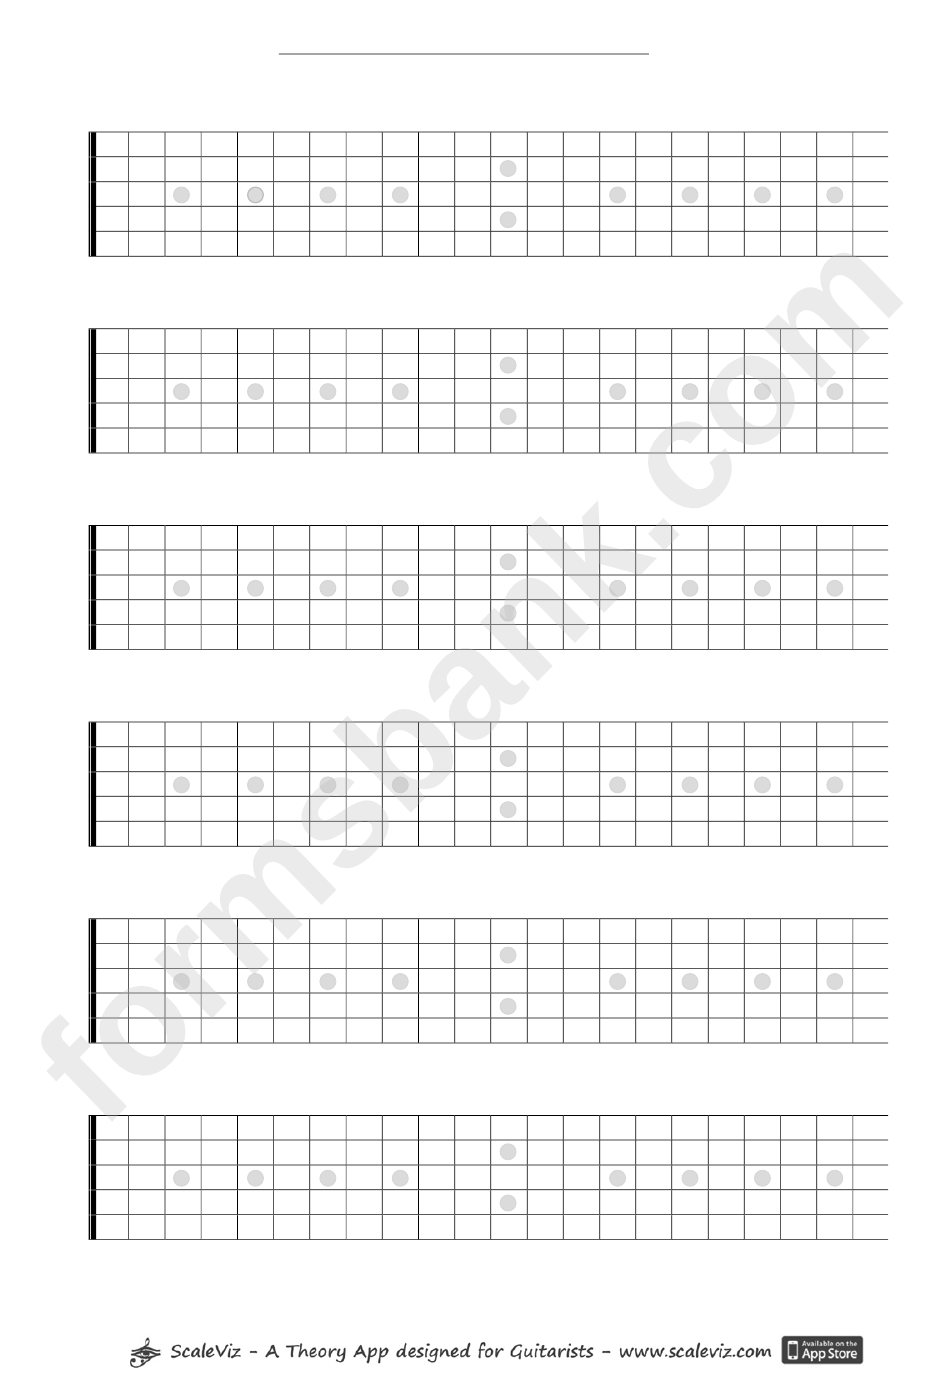 Full Fretboard 6x21 Frets Guitar Neck Template printable pdf download